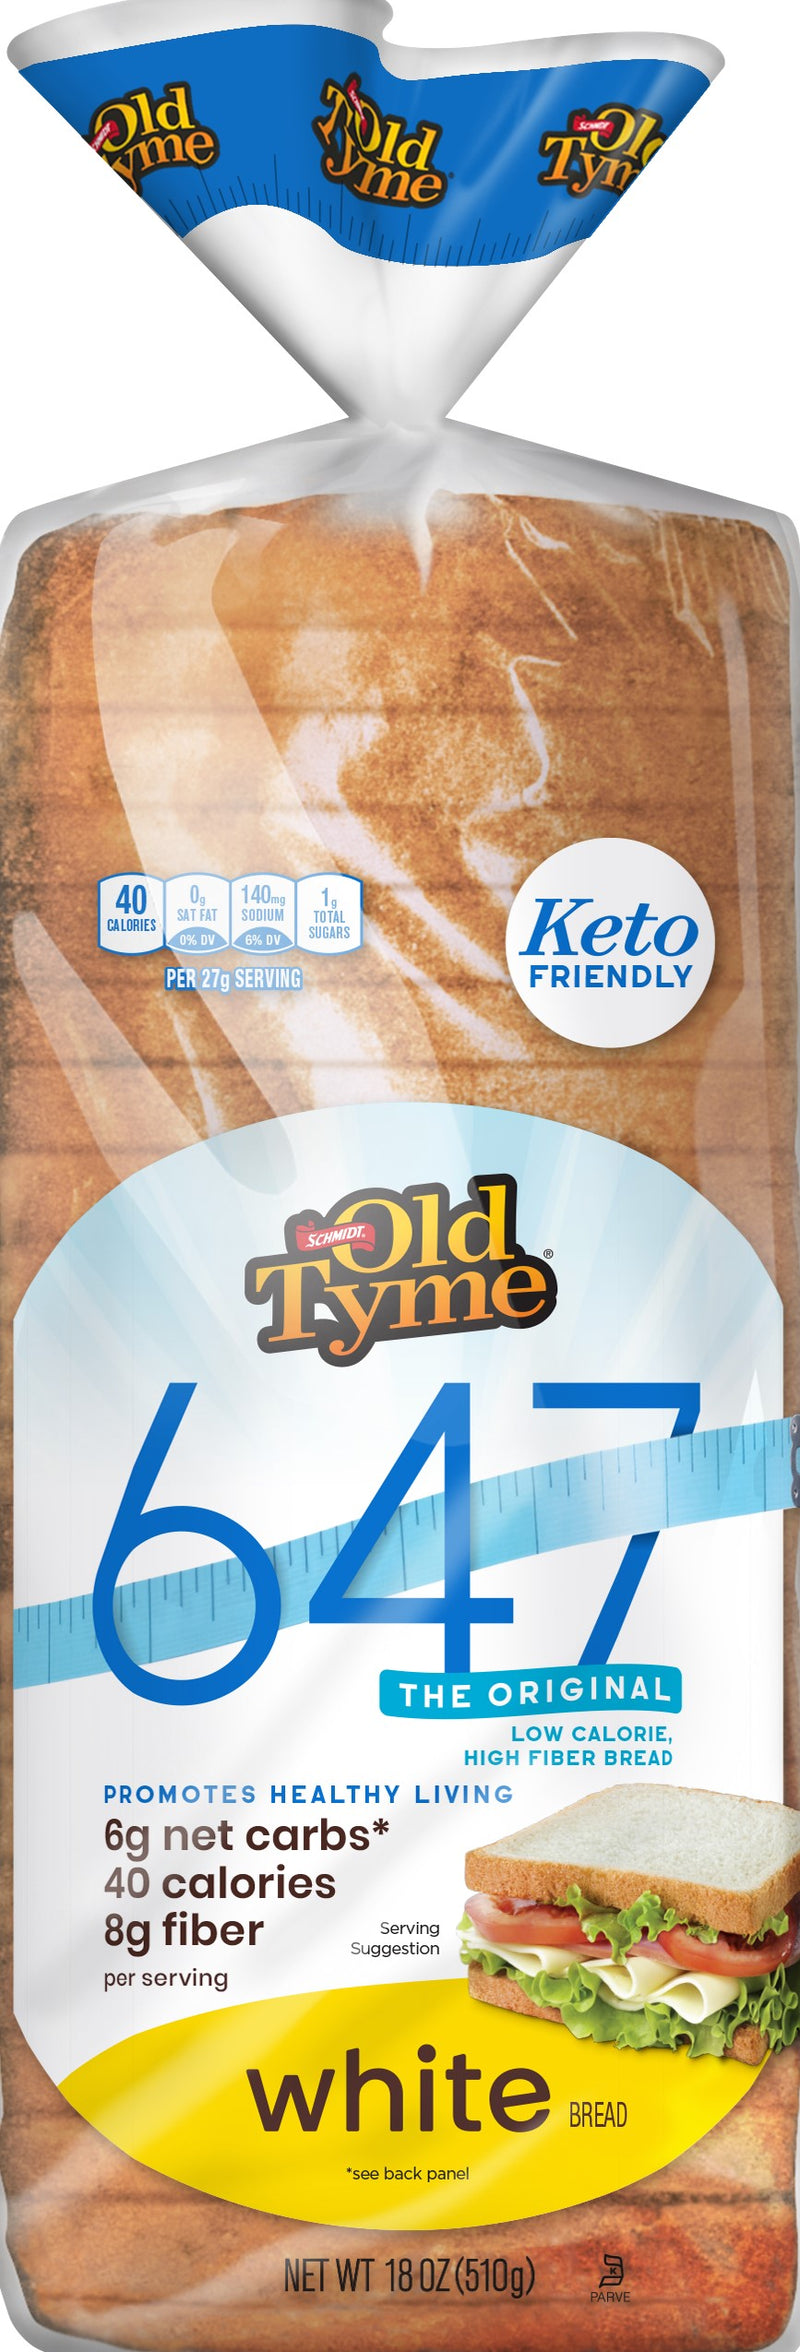 Schmidt / Old Tyme 647 Bread